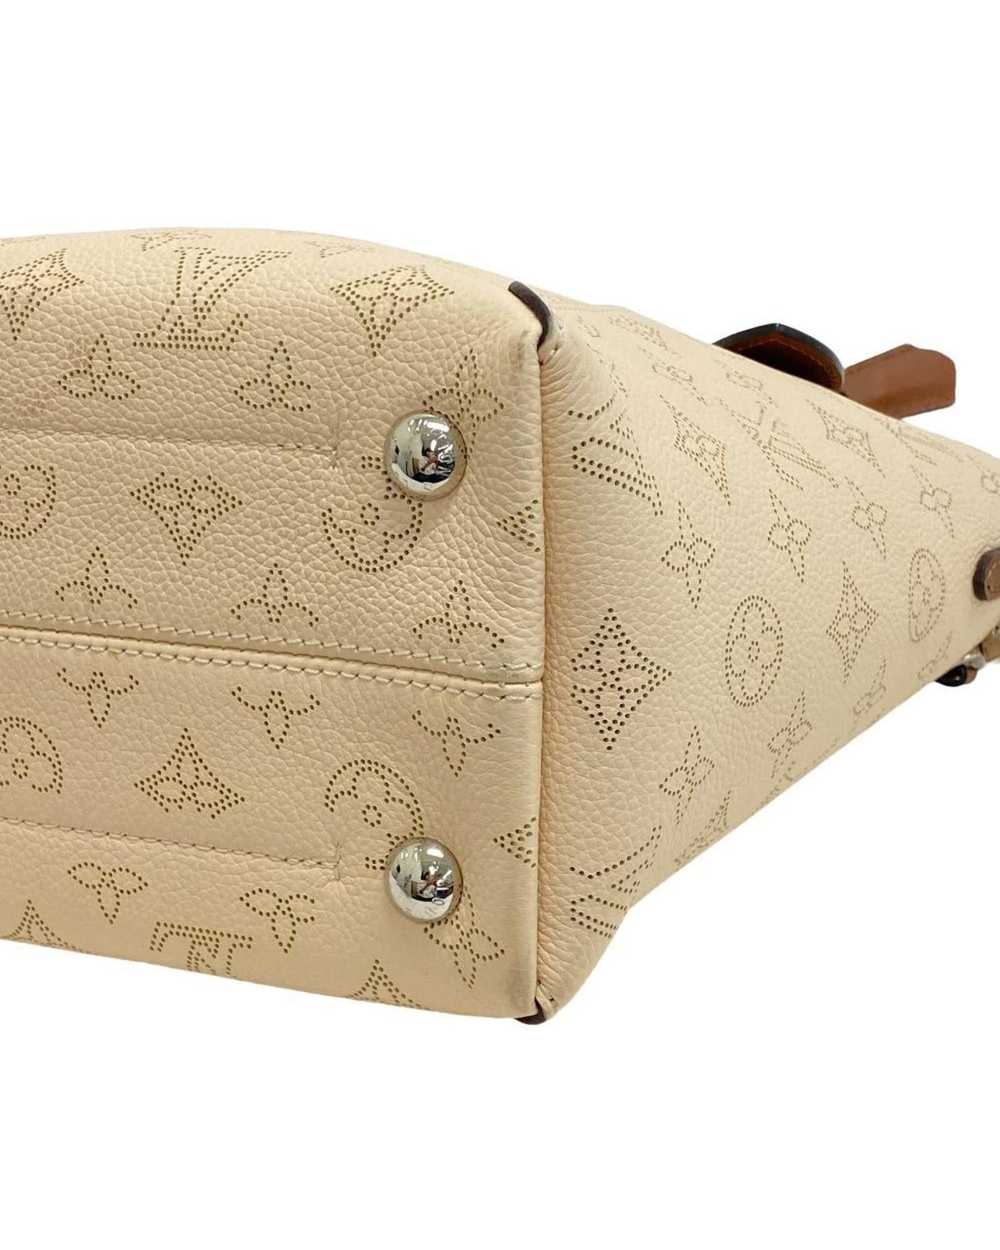 Louis Vuitton Elegant Beige Leather 2-Way Bag wit… - image 6